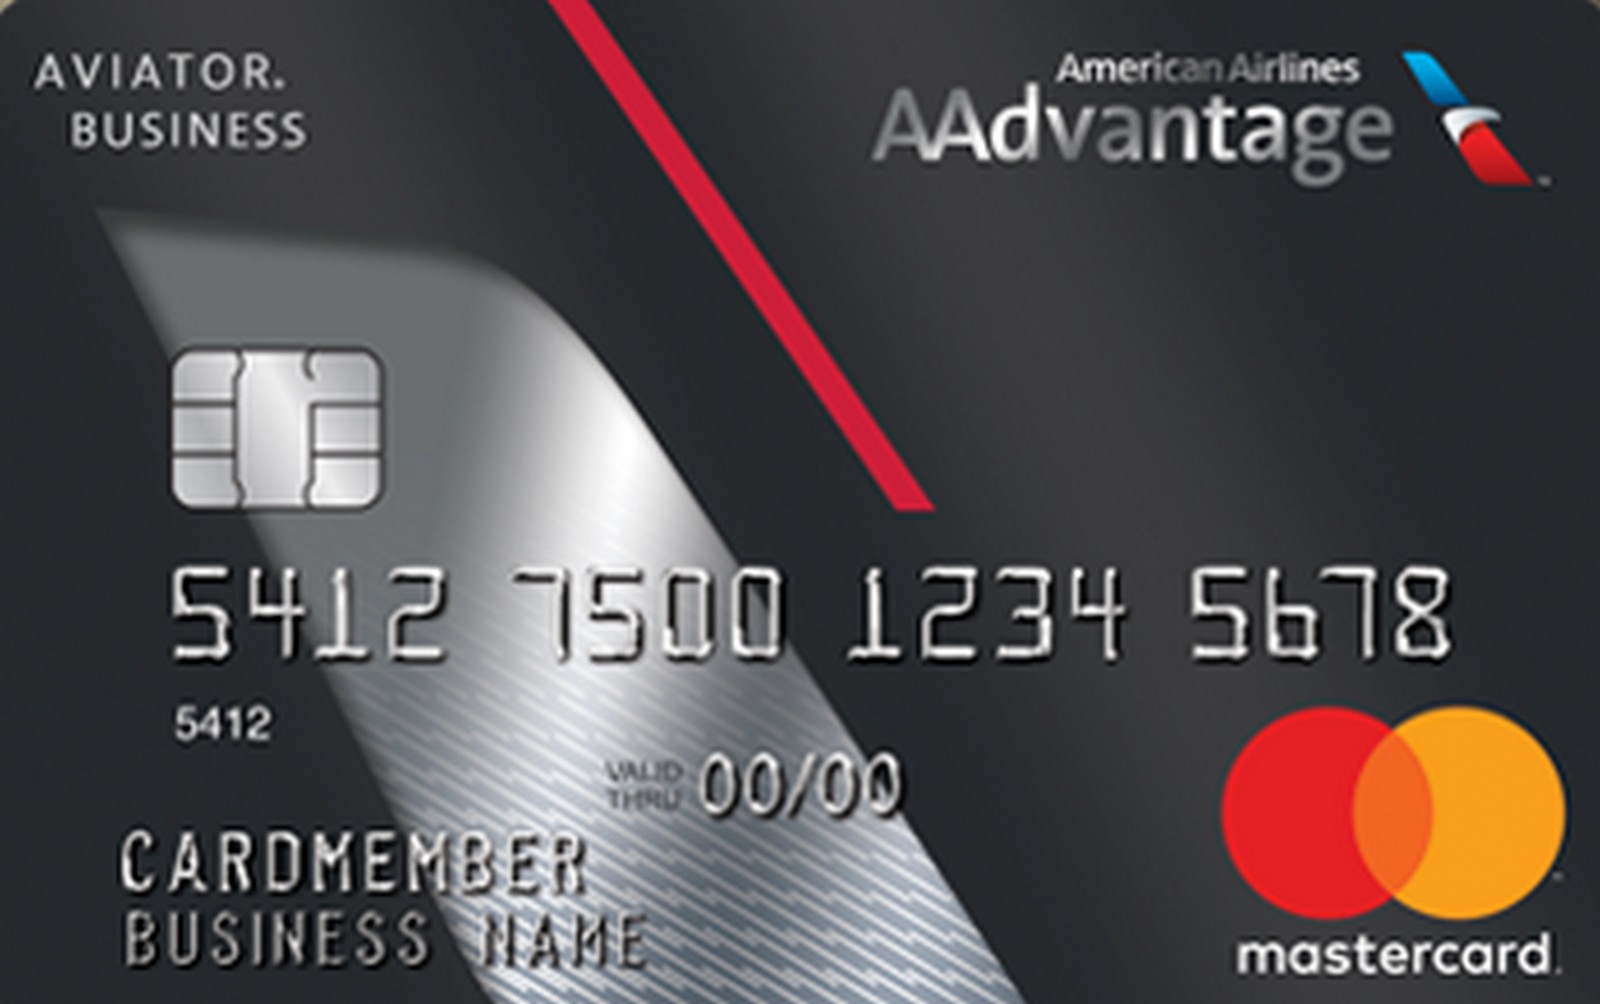 Barclays AAdvantage Aviator Business Card 60K bonus